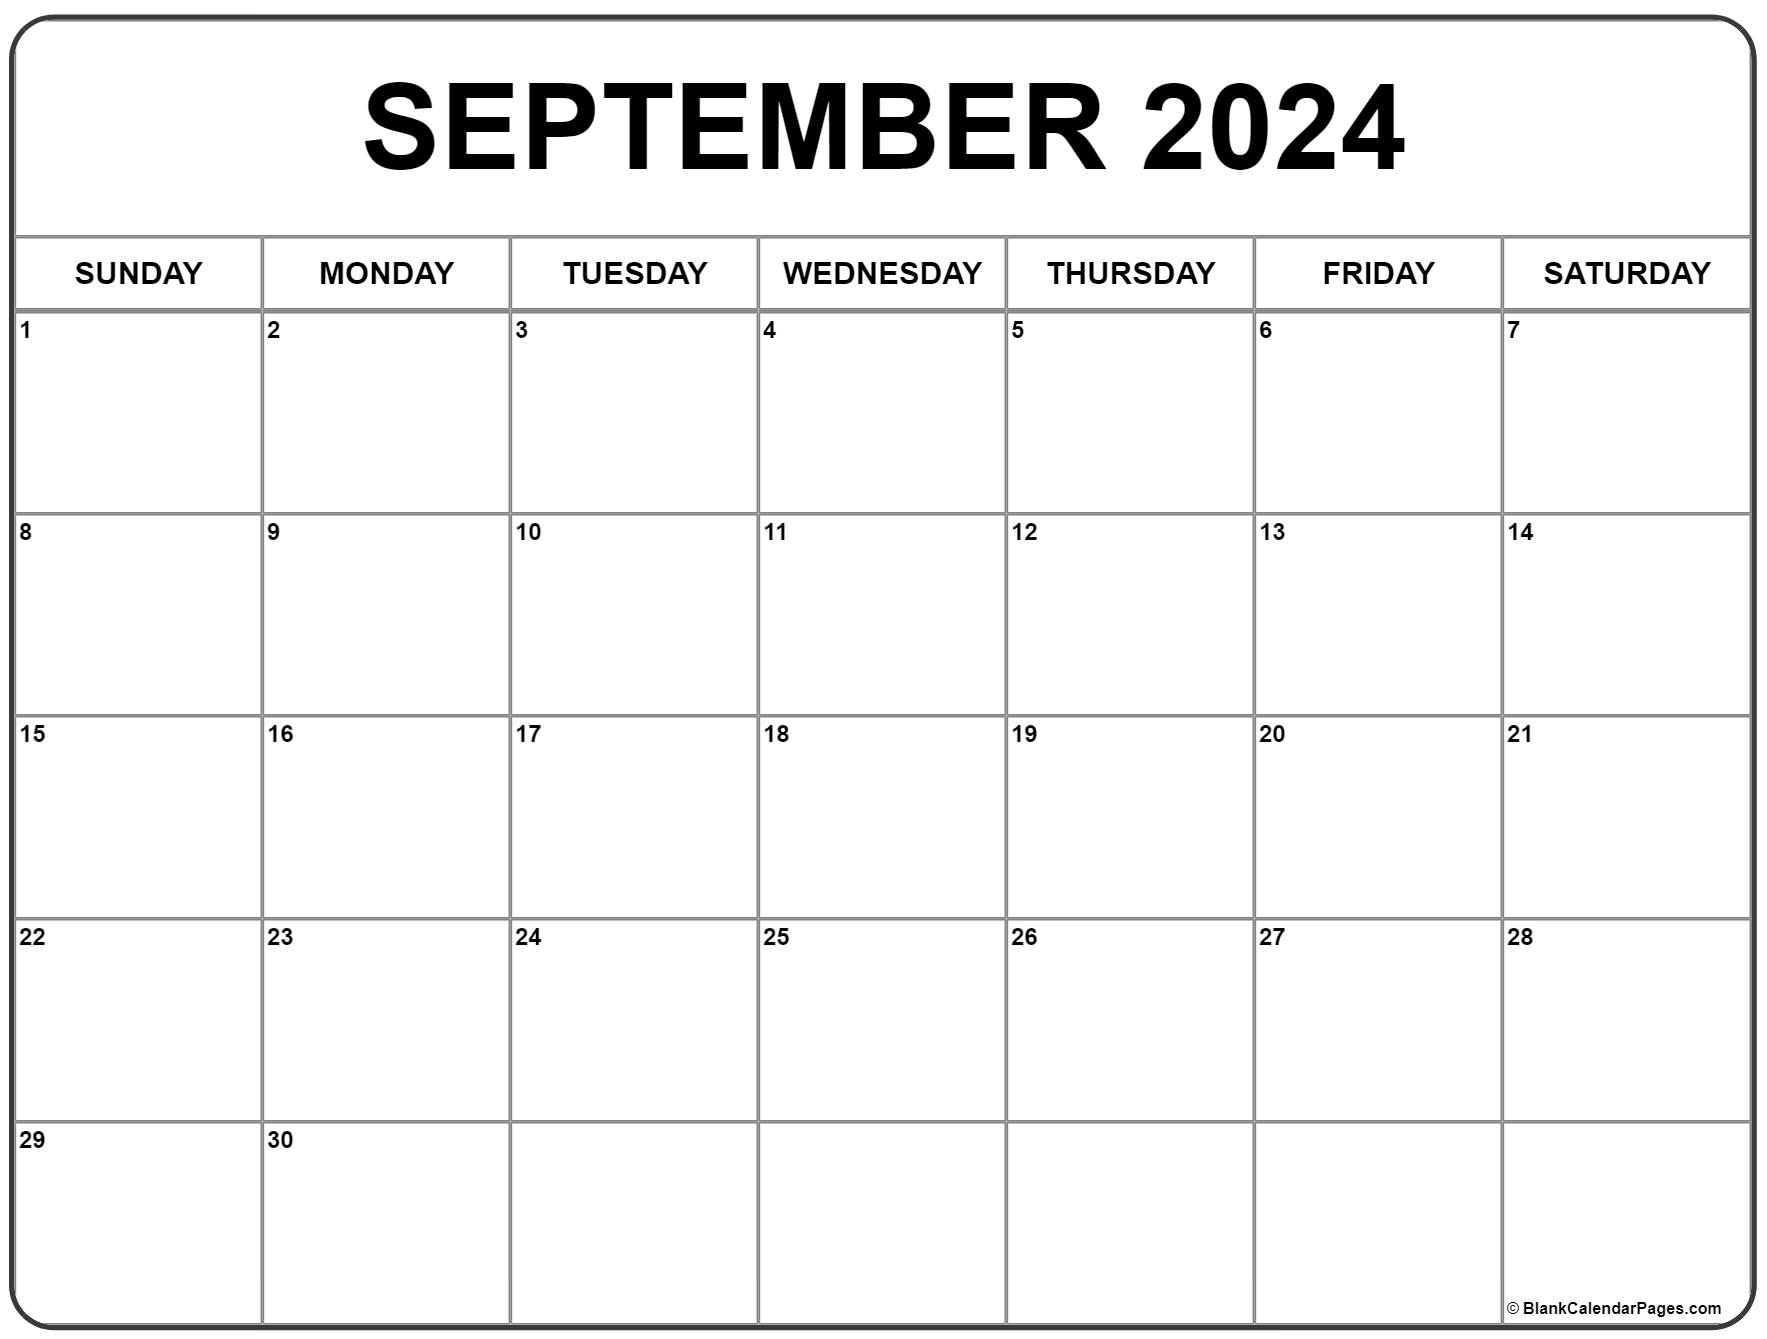 Free Calendar September 2022 September 2022 Calendar | Free Printable Calendar Templates